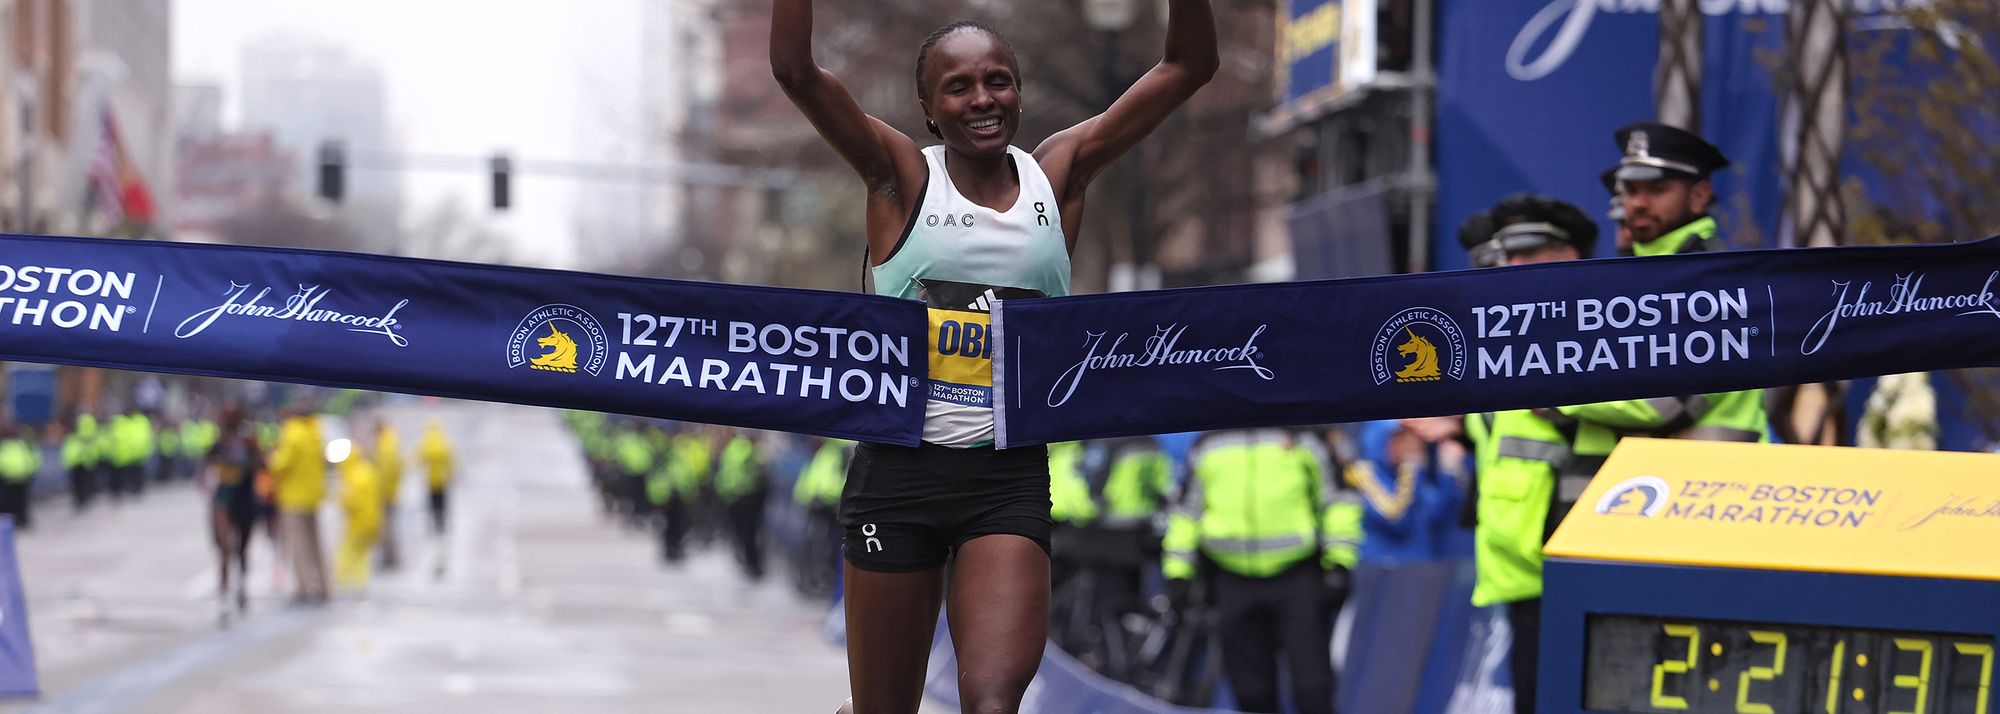 Hellen Obiri is one of four past winners racing in Boston on 15 April